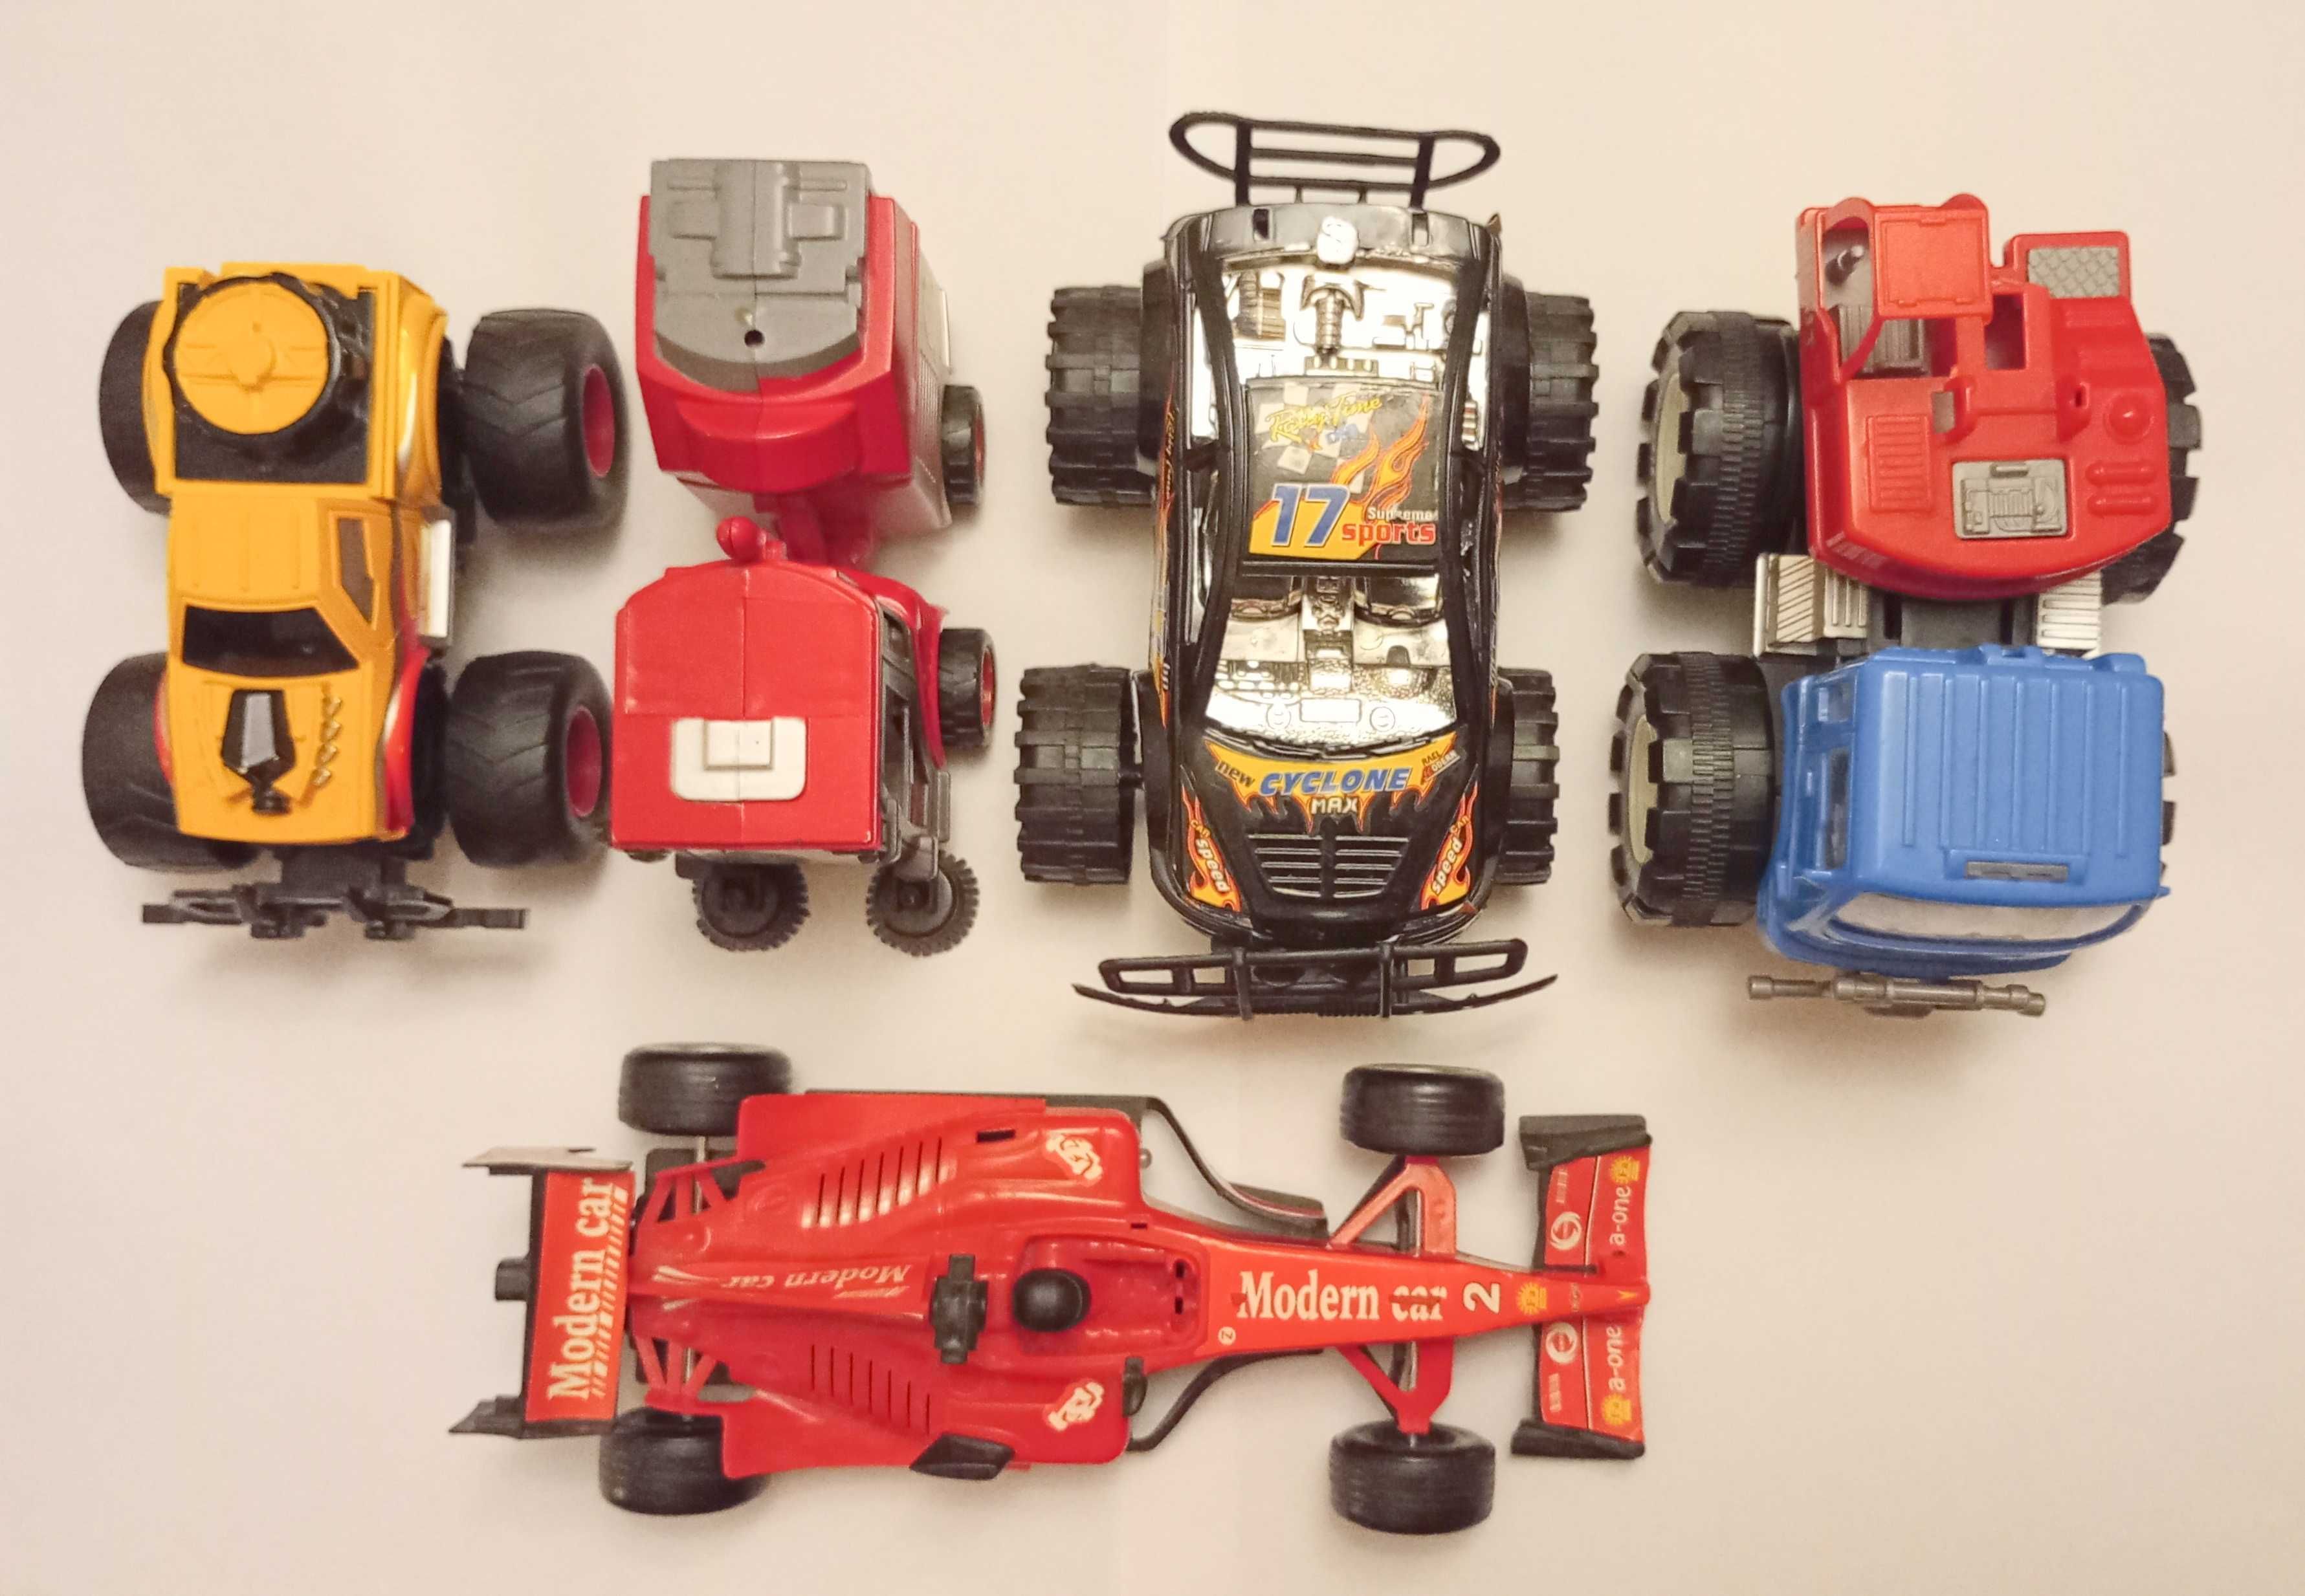 zabawki dla dzieci auta samochody bolid monster track 5 sztuk